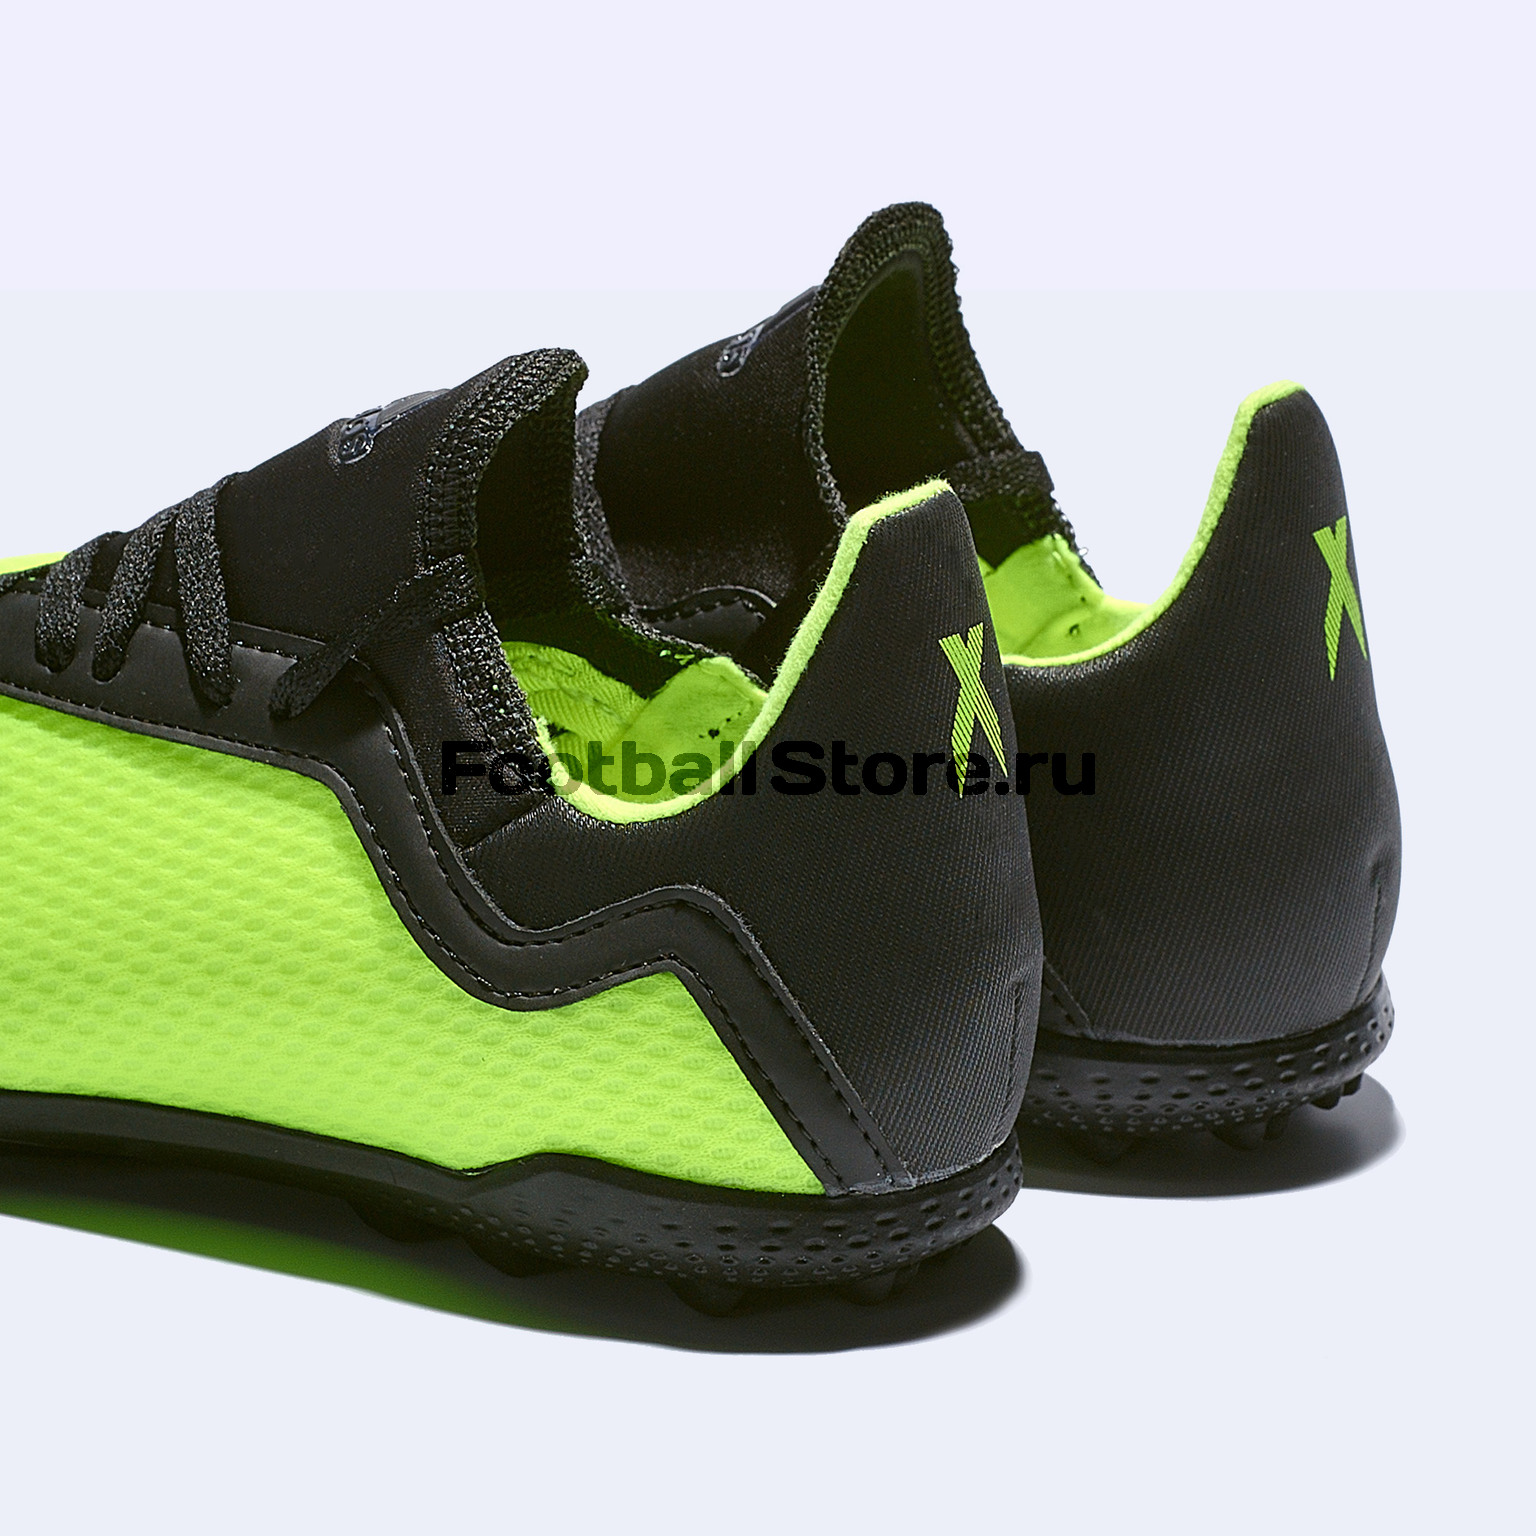 Шиповки детские Adidas X Tango 18.3 TF DB2423